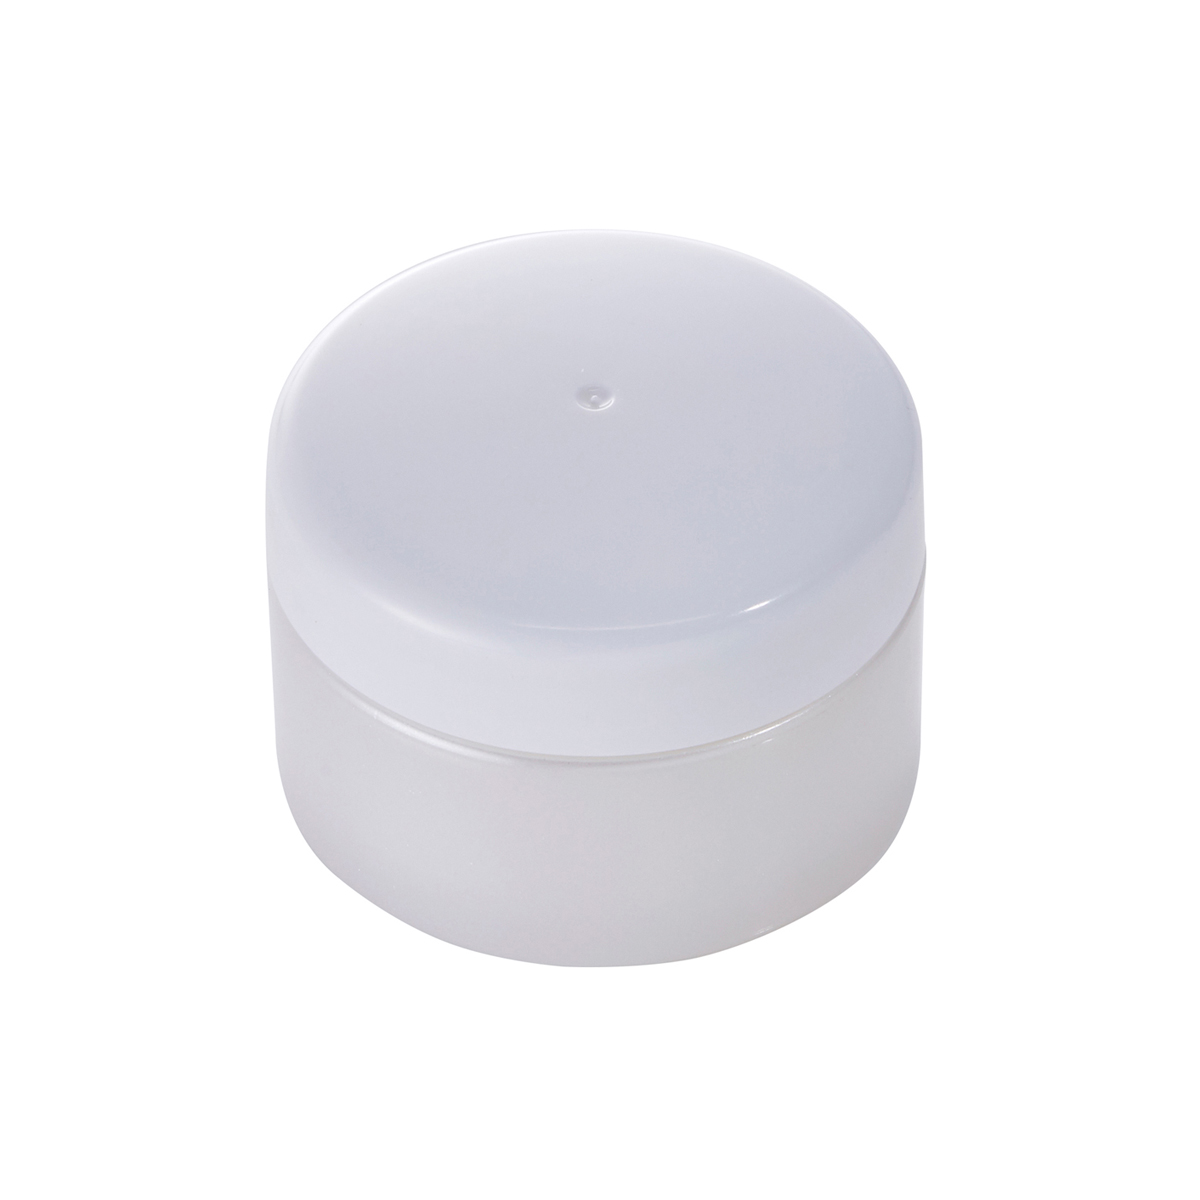 Airless Pressure Cream Jar